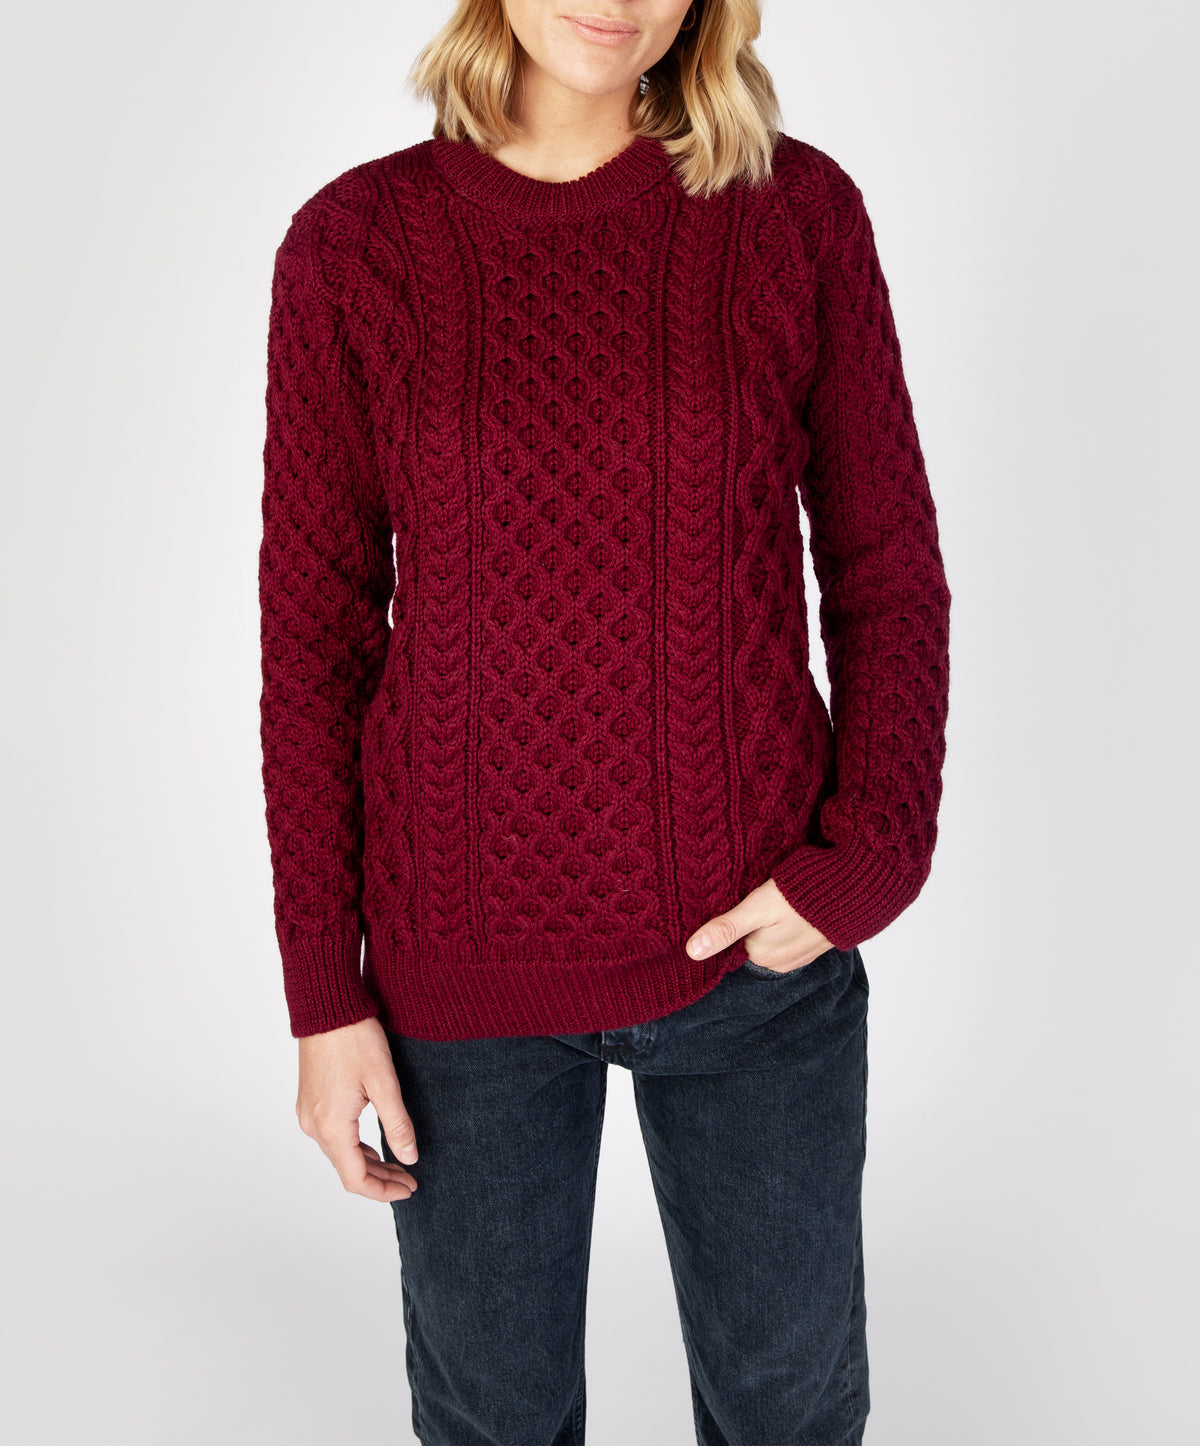 IrelandsEye Knitwear Blasket Honeycomb Stitch Womens Aran Sweater Claret